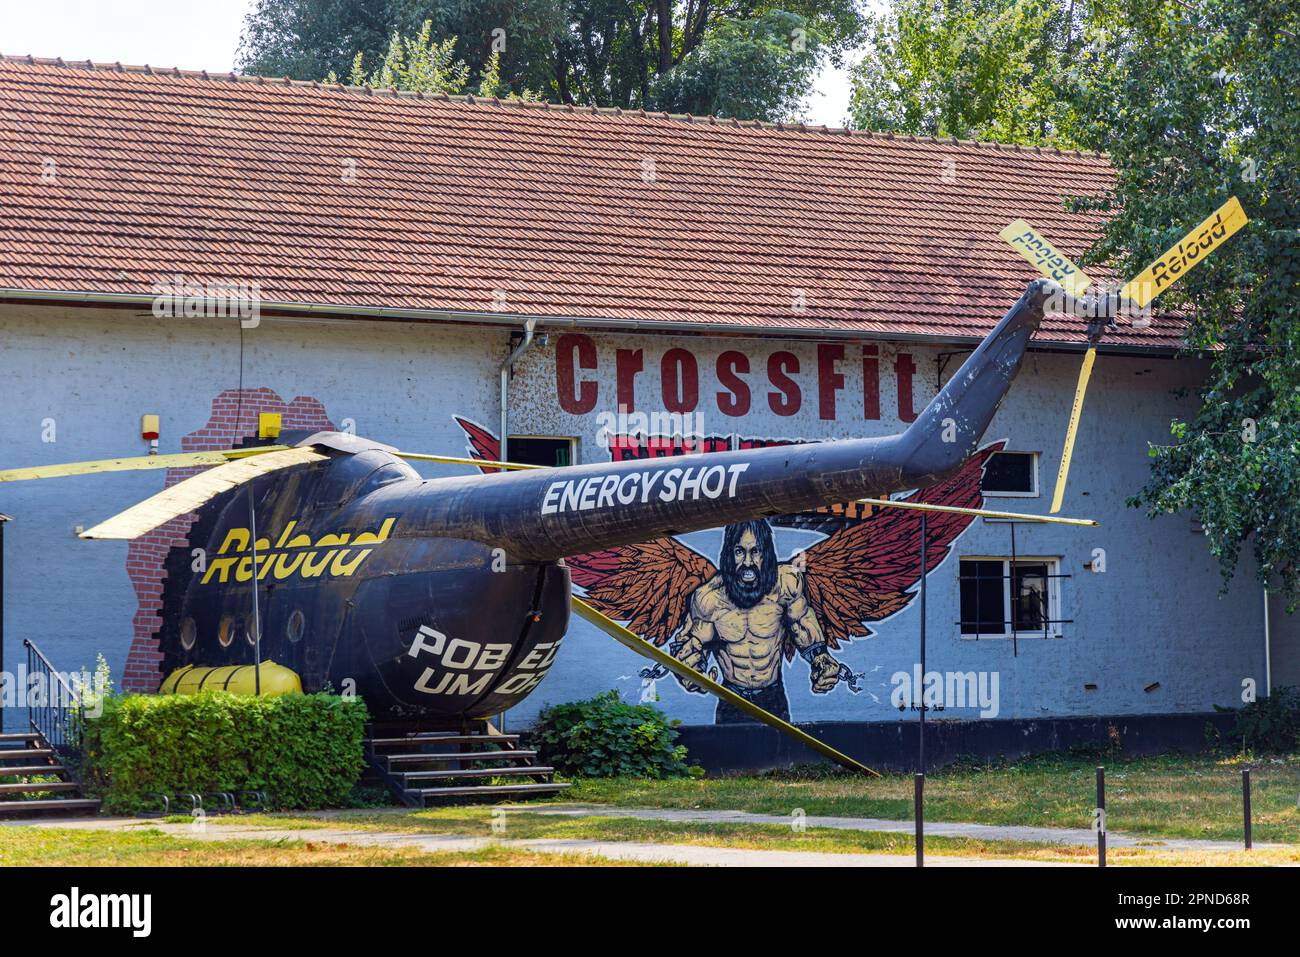 Novi Sad, Serbien - 19. August 2022: Altes militärisches Hubschrauberflugzeug vor der Bas Celik Fit Gym Crossfit Athletic Game Company. Stockfoto